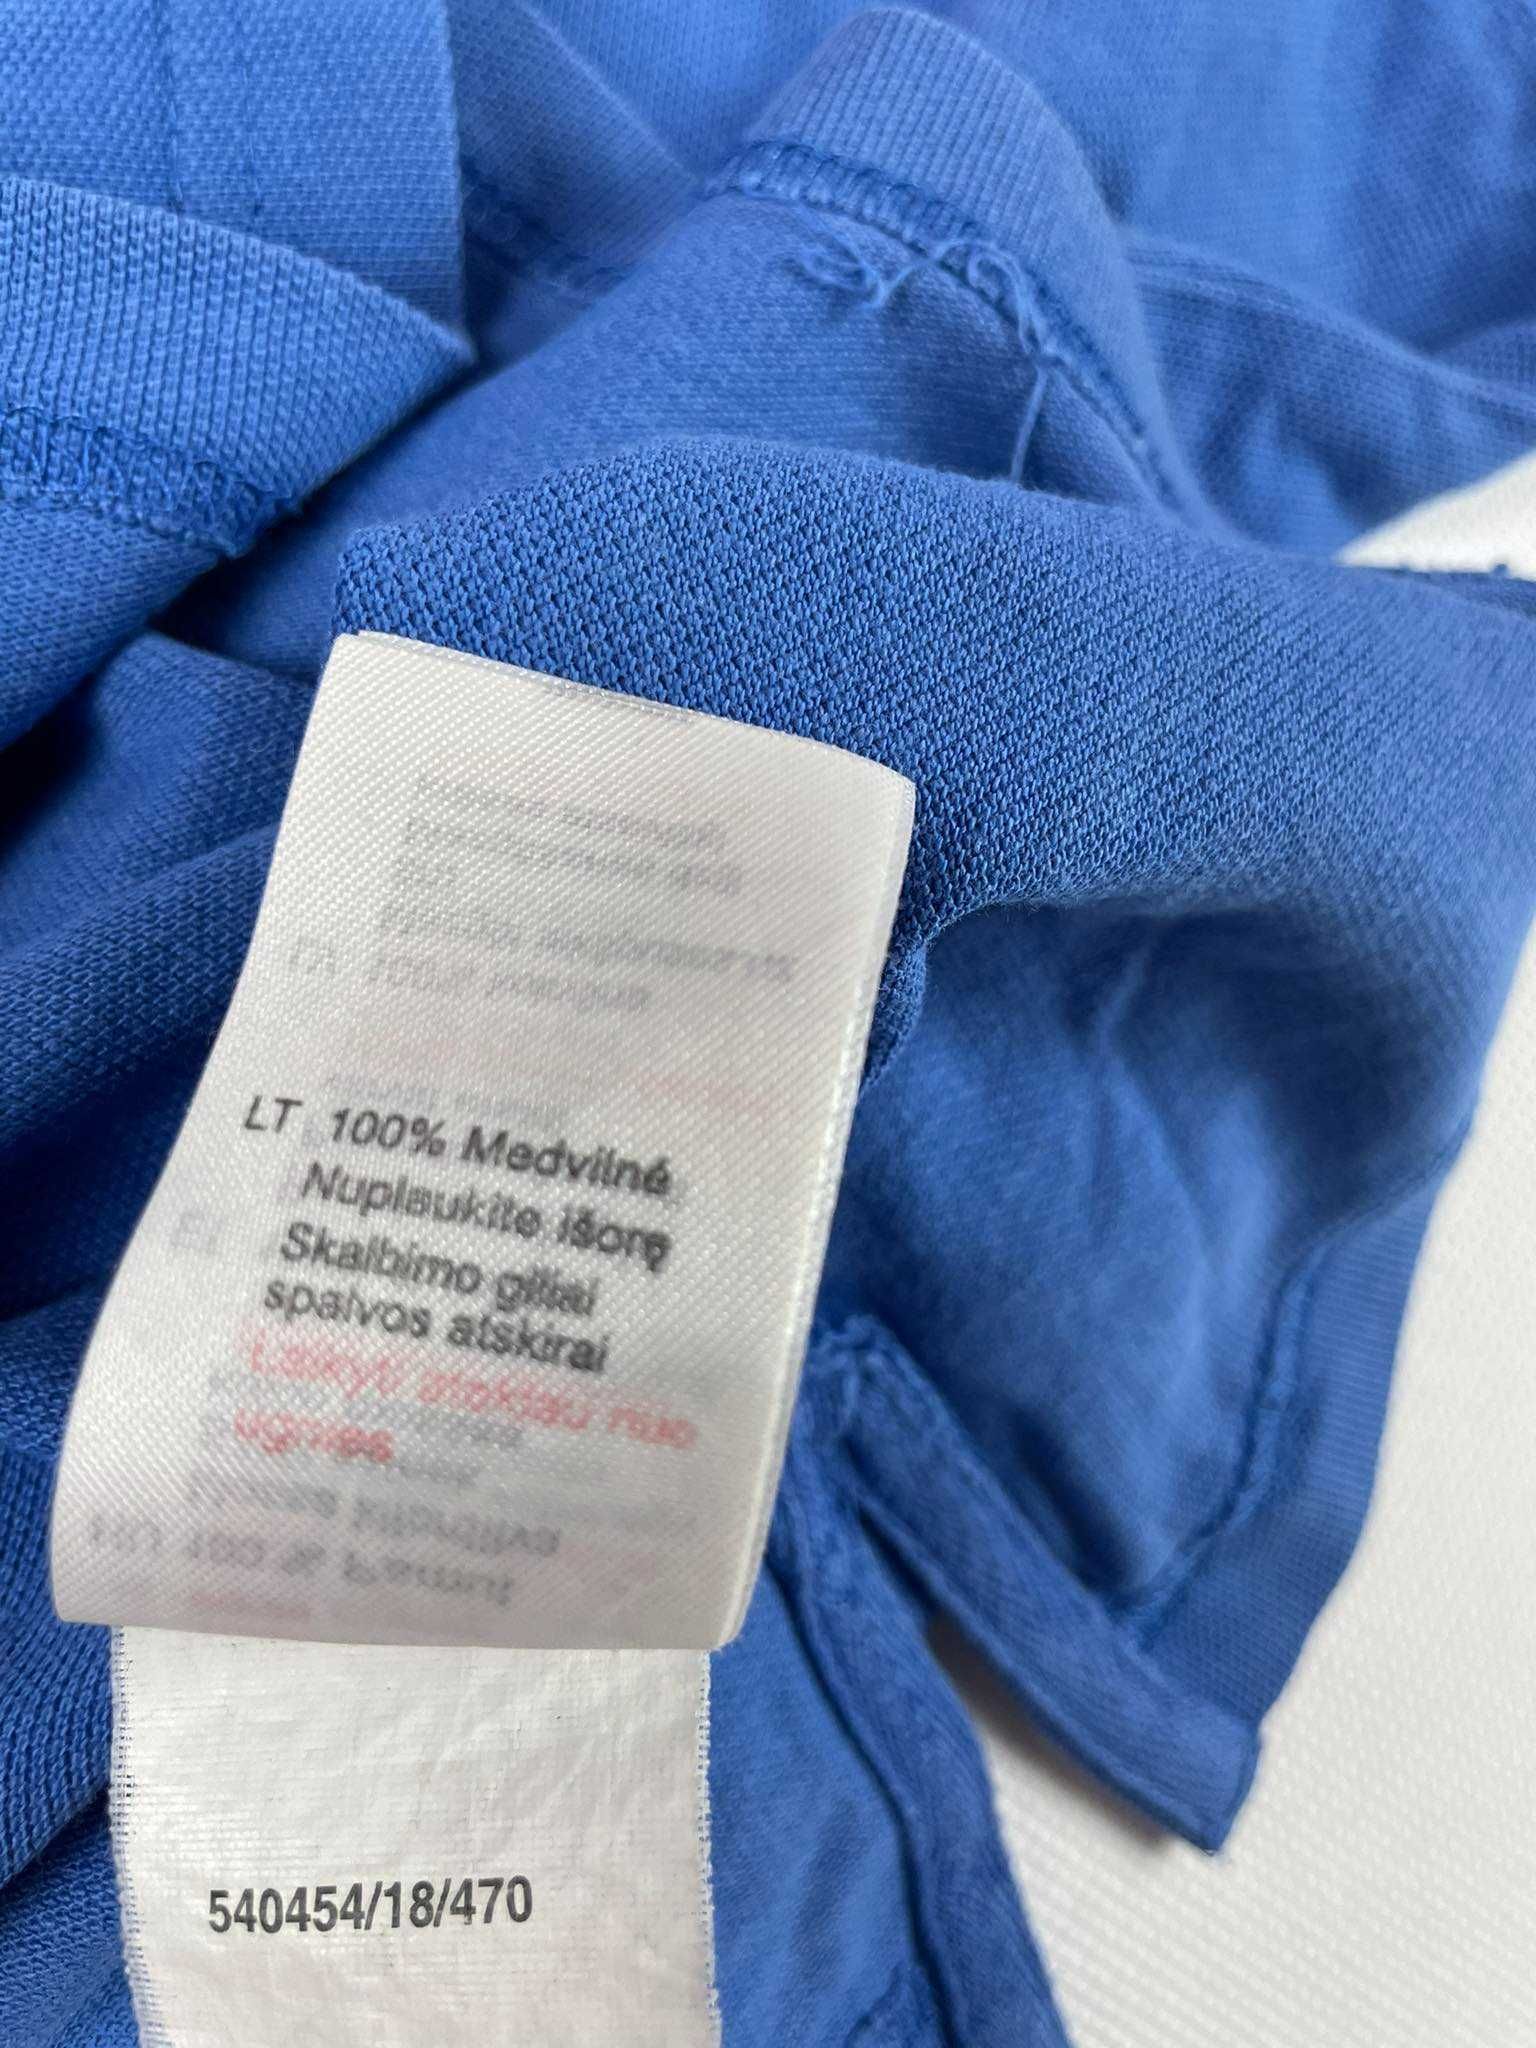 Koszulka Polo Pierre Cardin regular fit niebieska XL